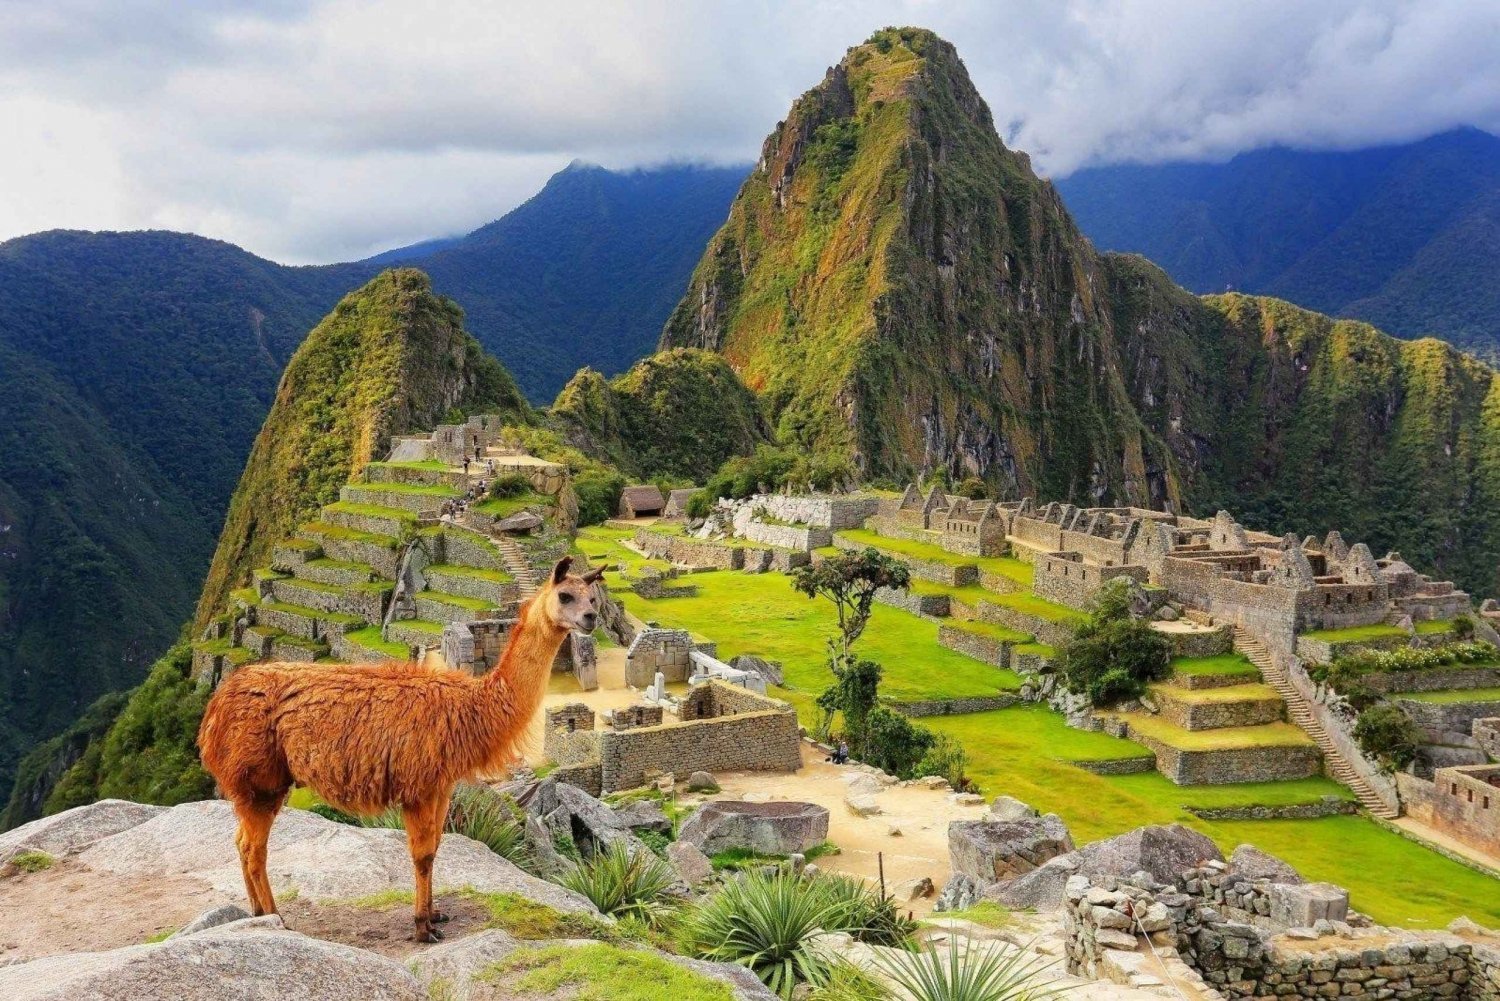 Machu Picchu: General Admission Ticket